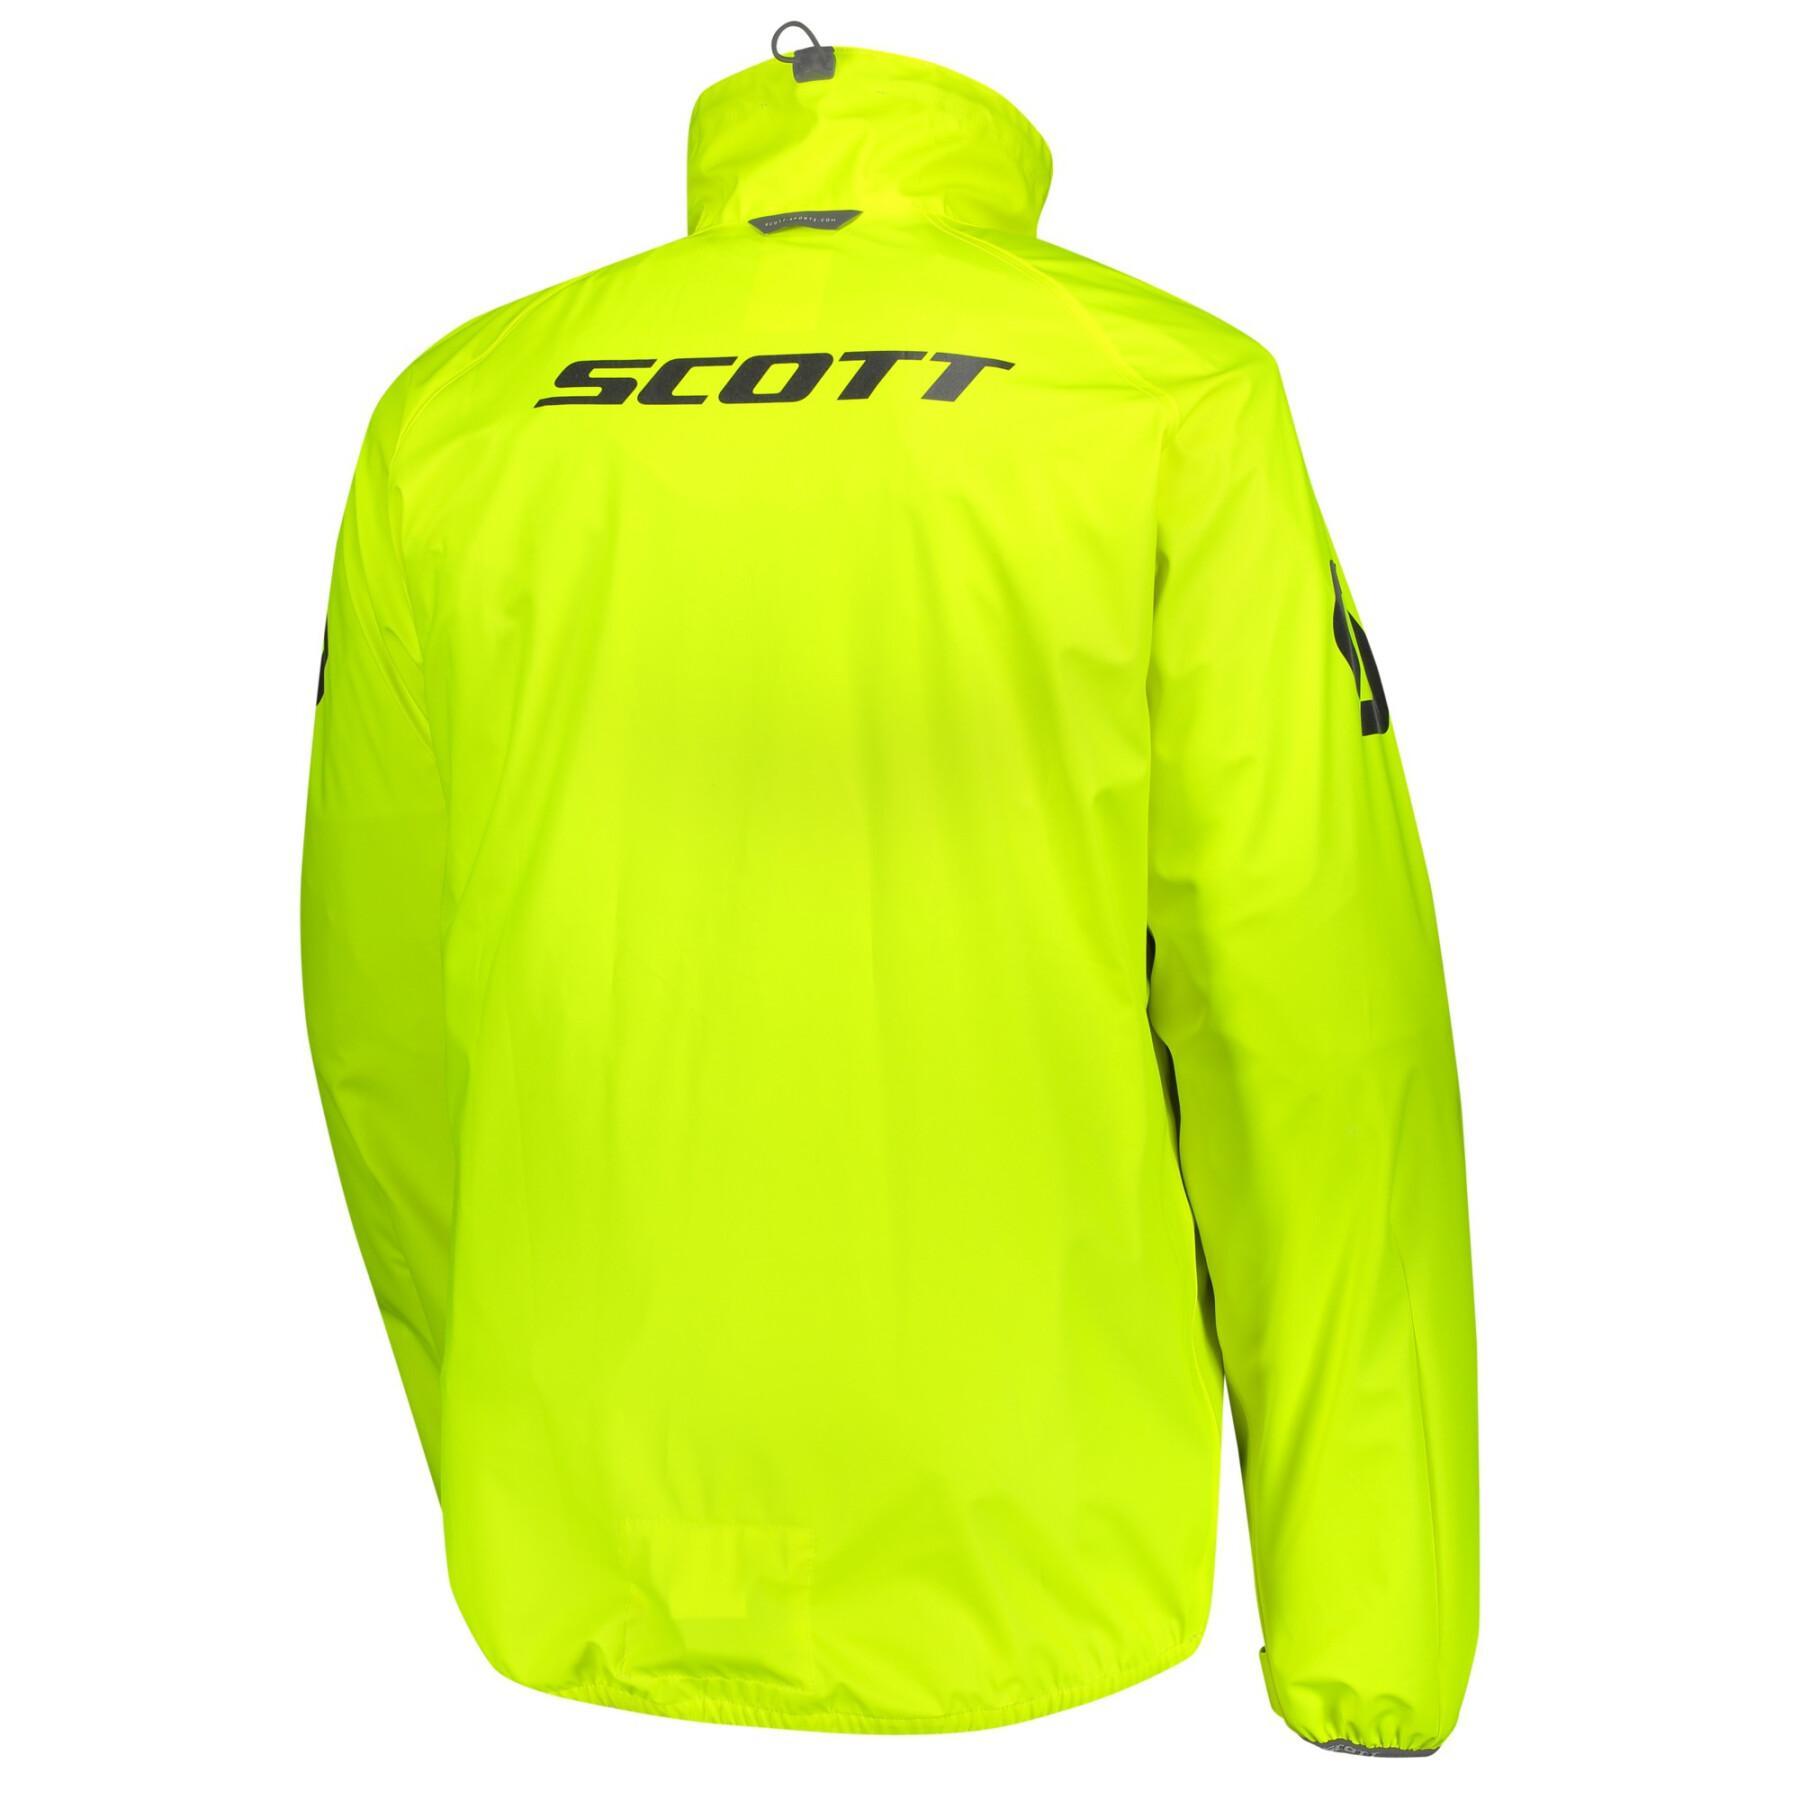 Motorcycle rain jacket Scott ergonomic pro DP D-size